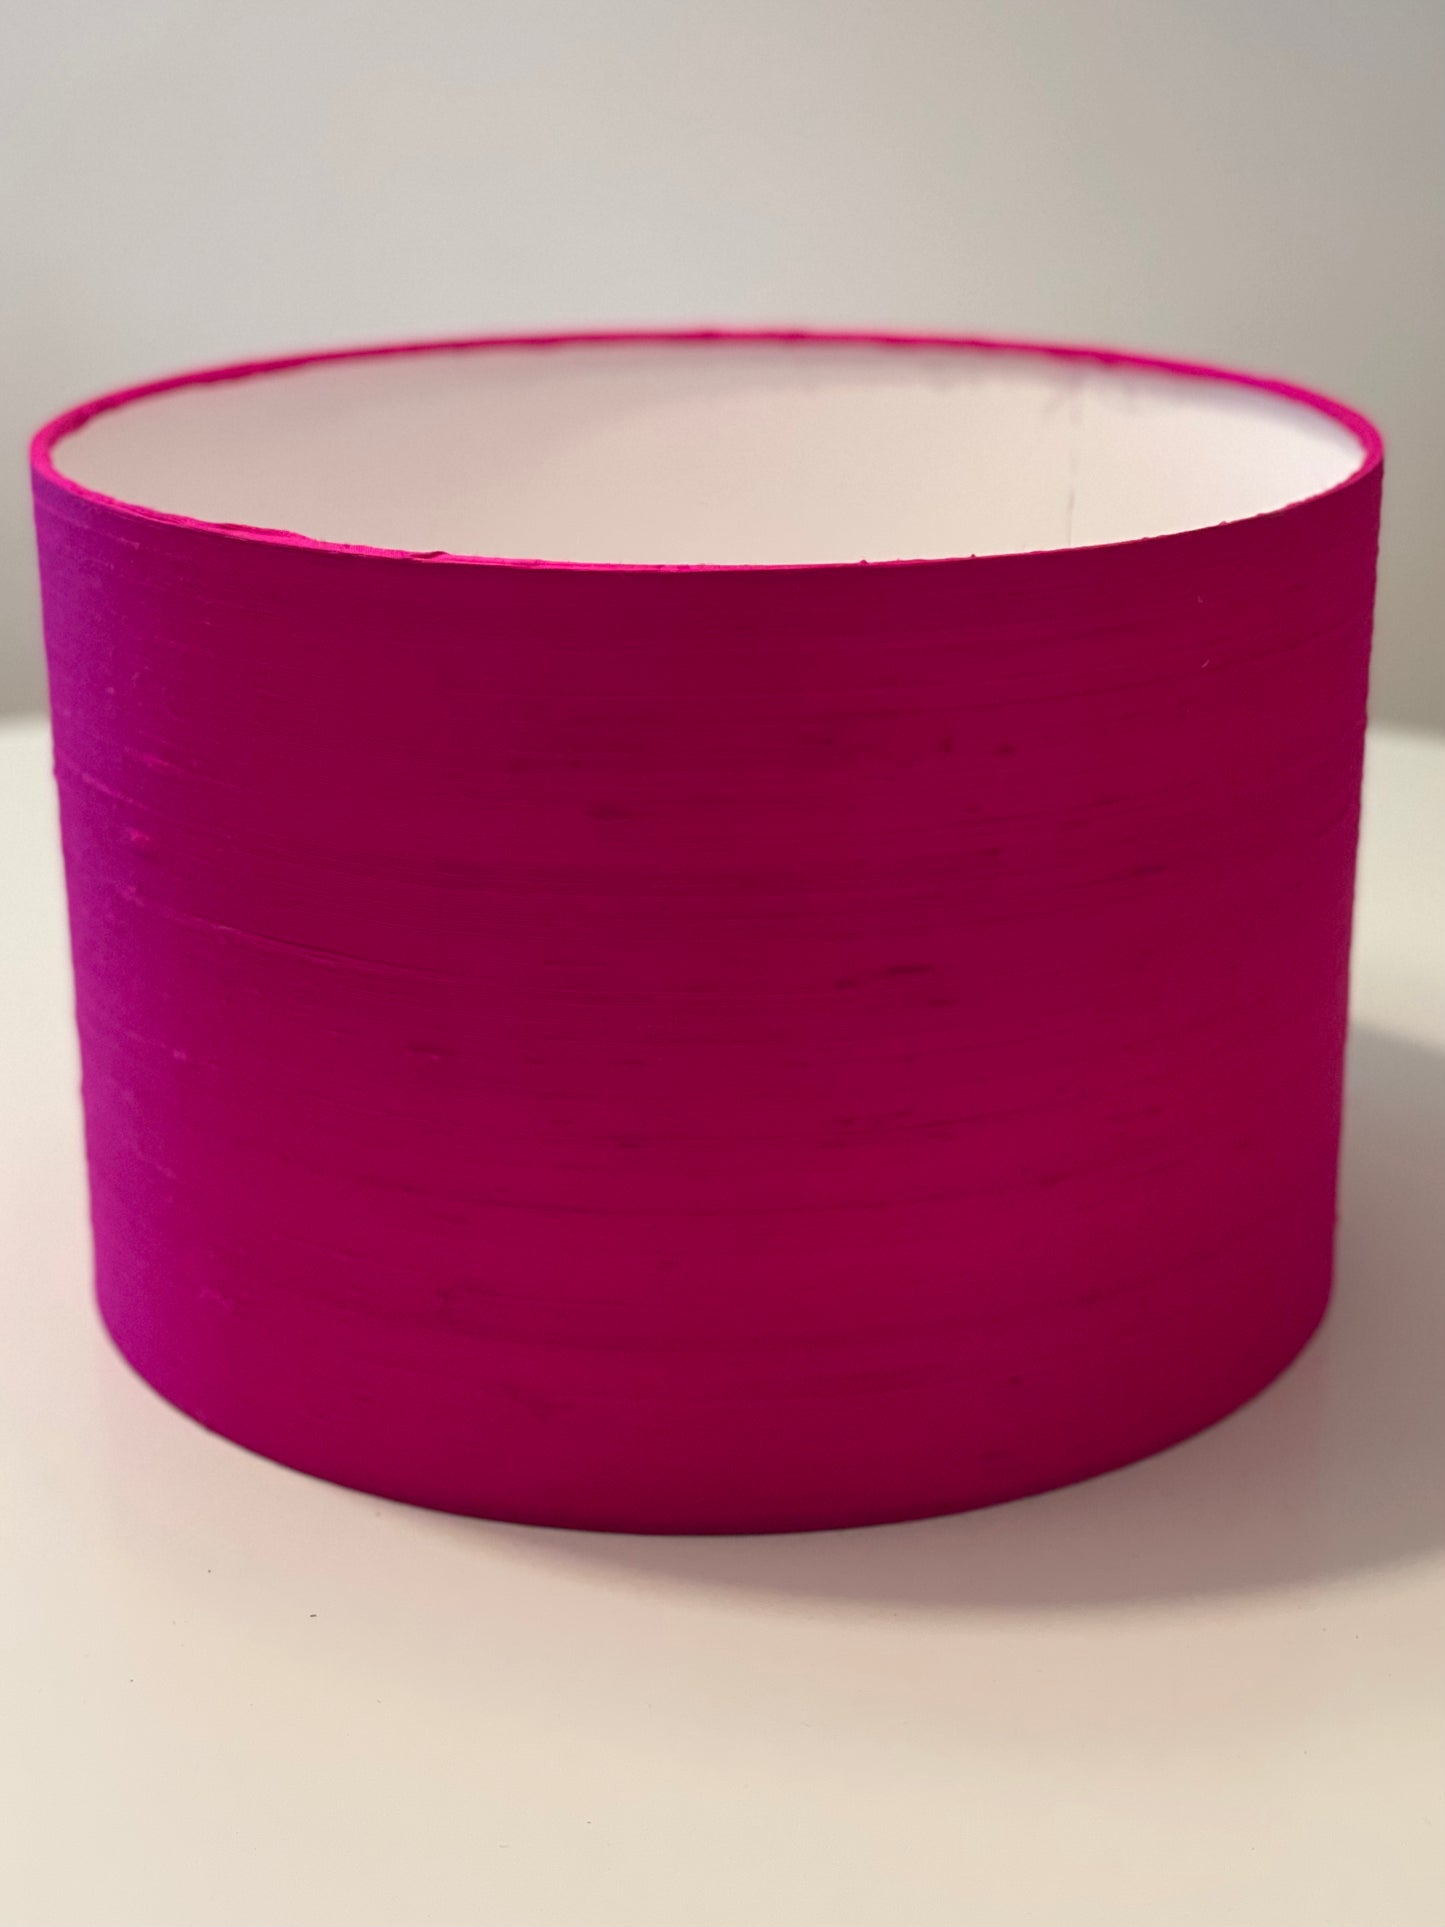 12 Inch Drum Shade. Fuchsia Pink Handloom Pure Silk Dupioni Fabric from Andhra Pradesh.